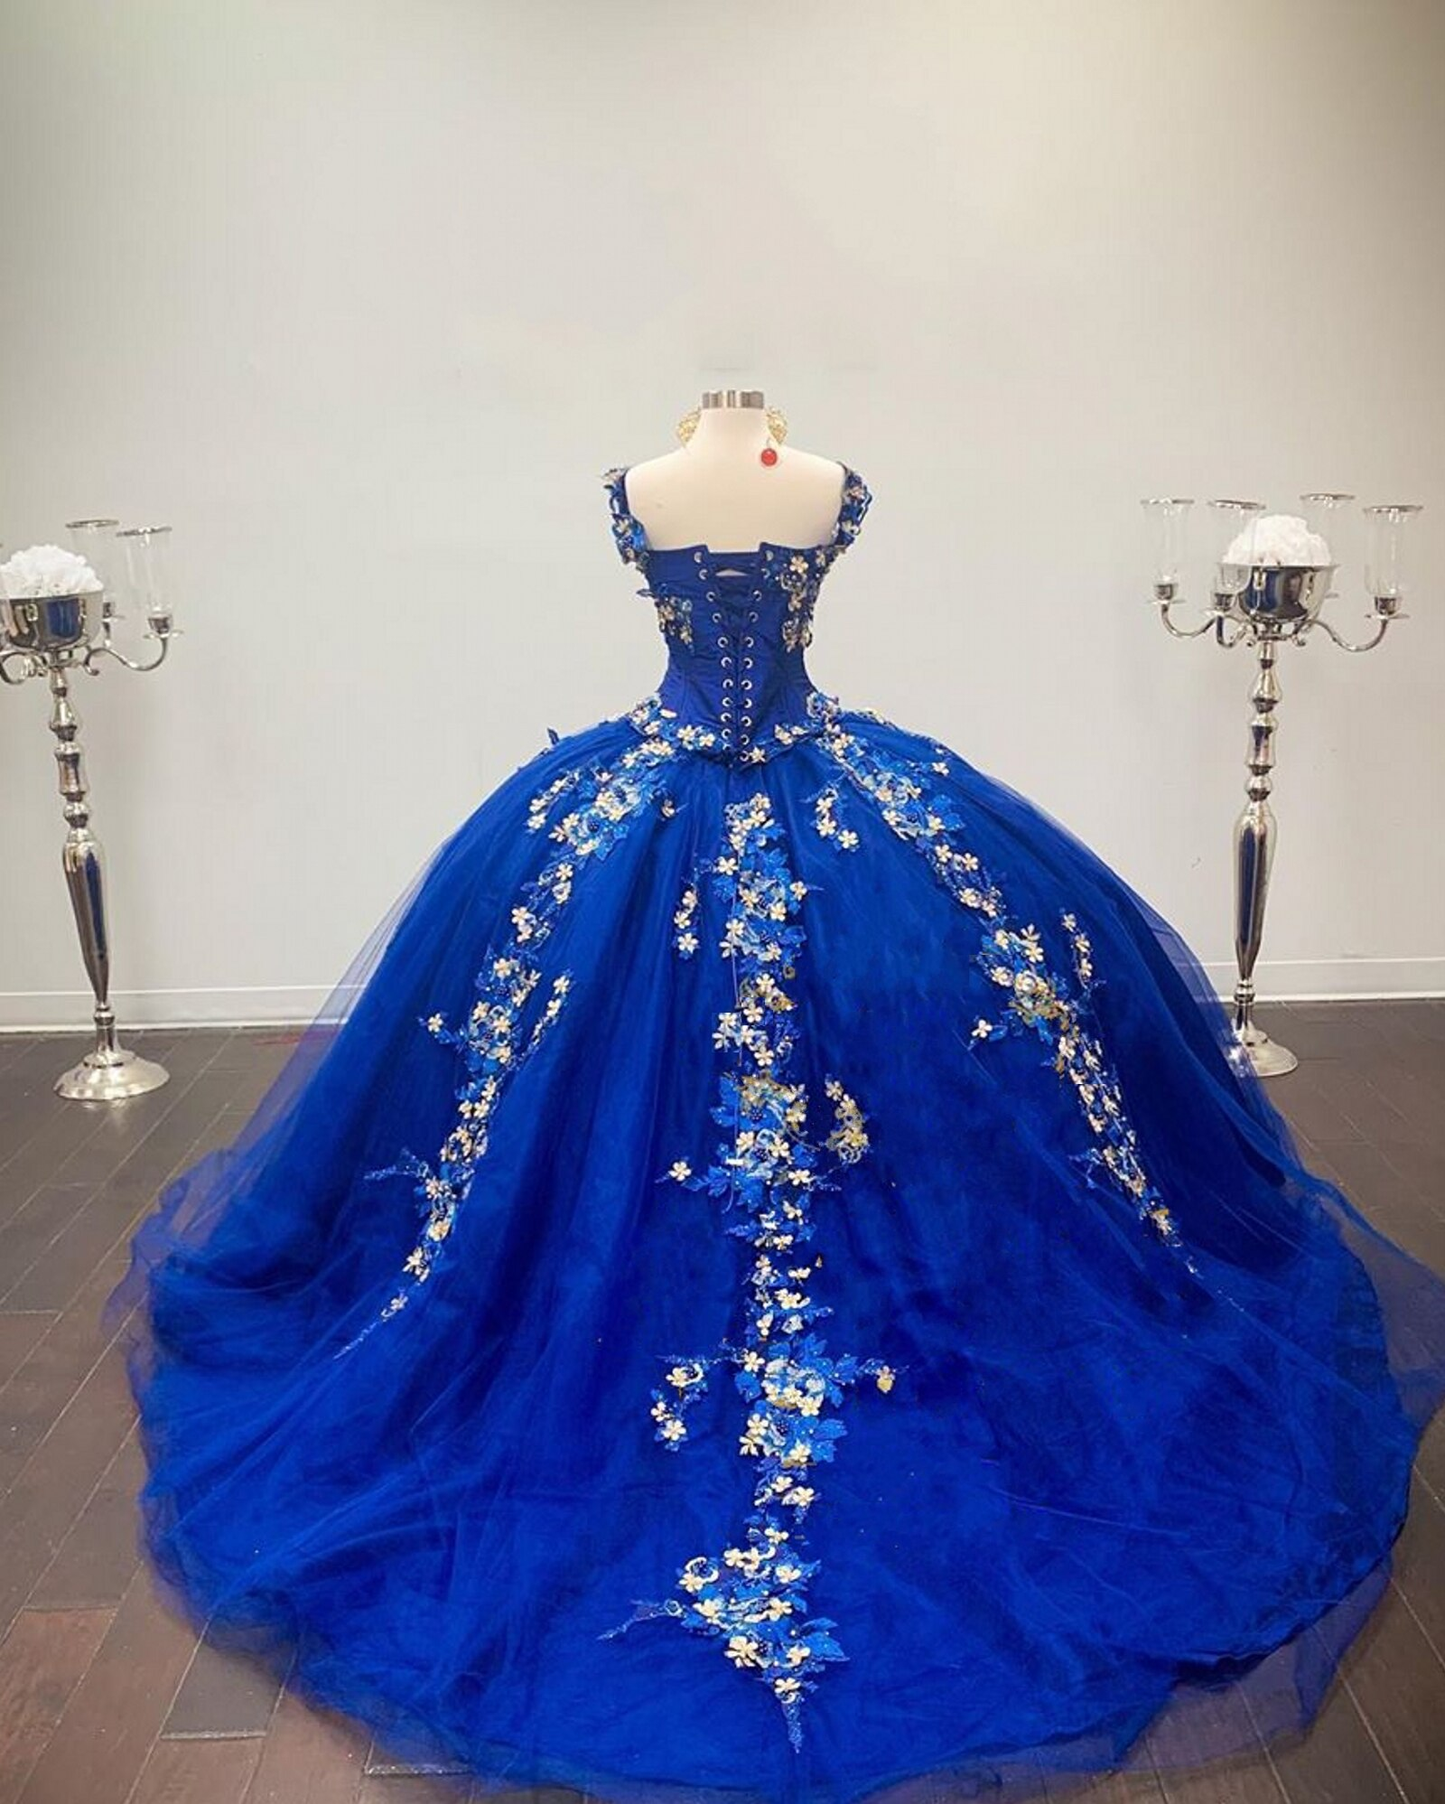 Royal Blue Ball Gown Quinceanera Dresses Off the Shoulder Beaded 3D FLowers Sweet 16 Dress Girls Party Gowns vestidos de quinceañera N1487